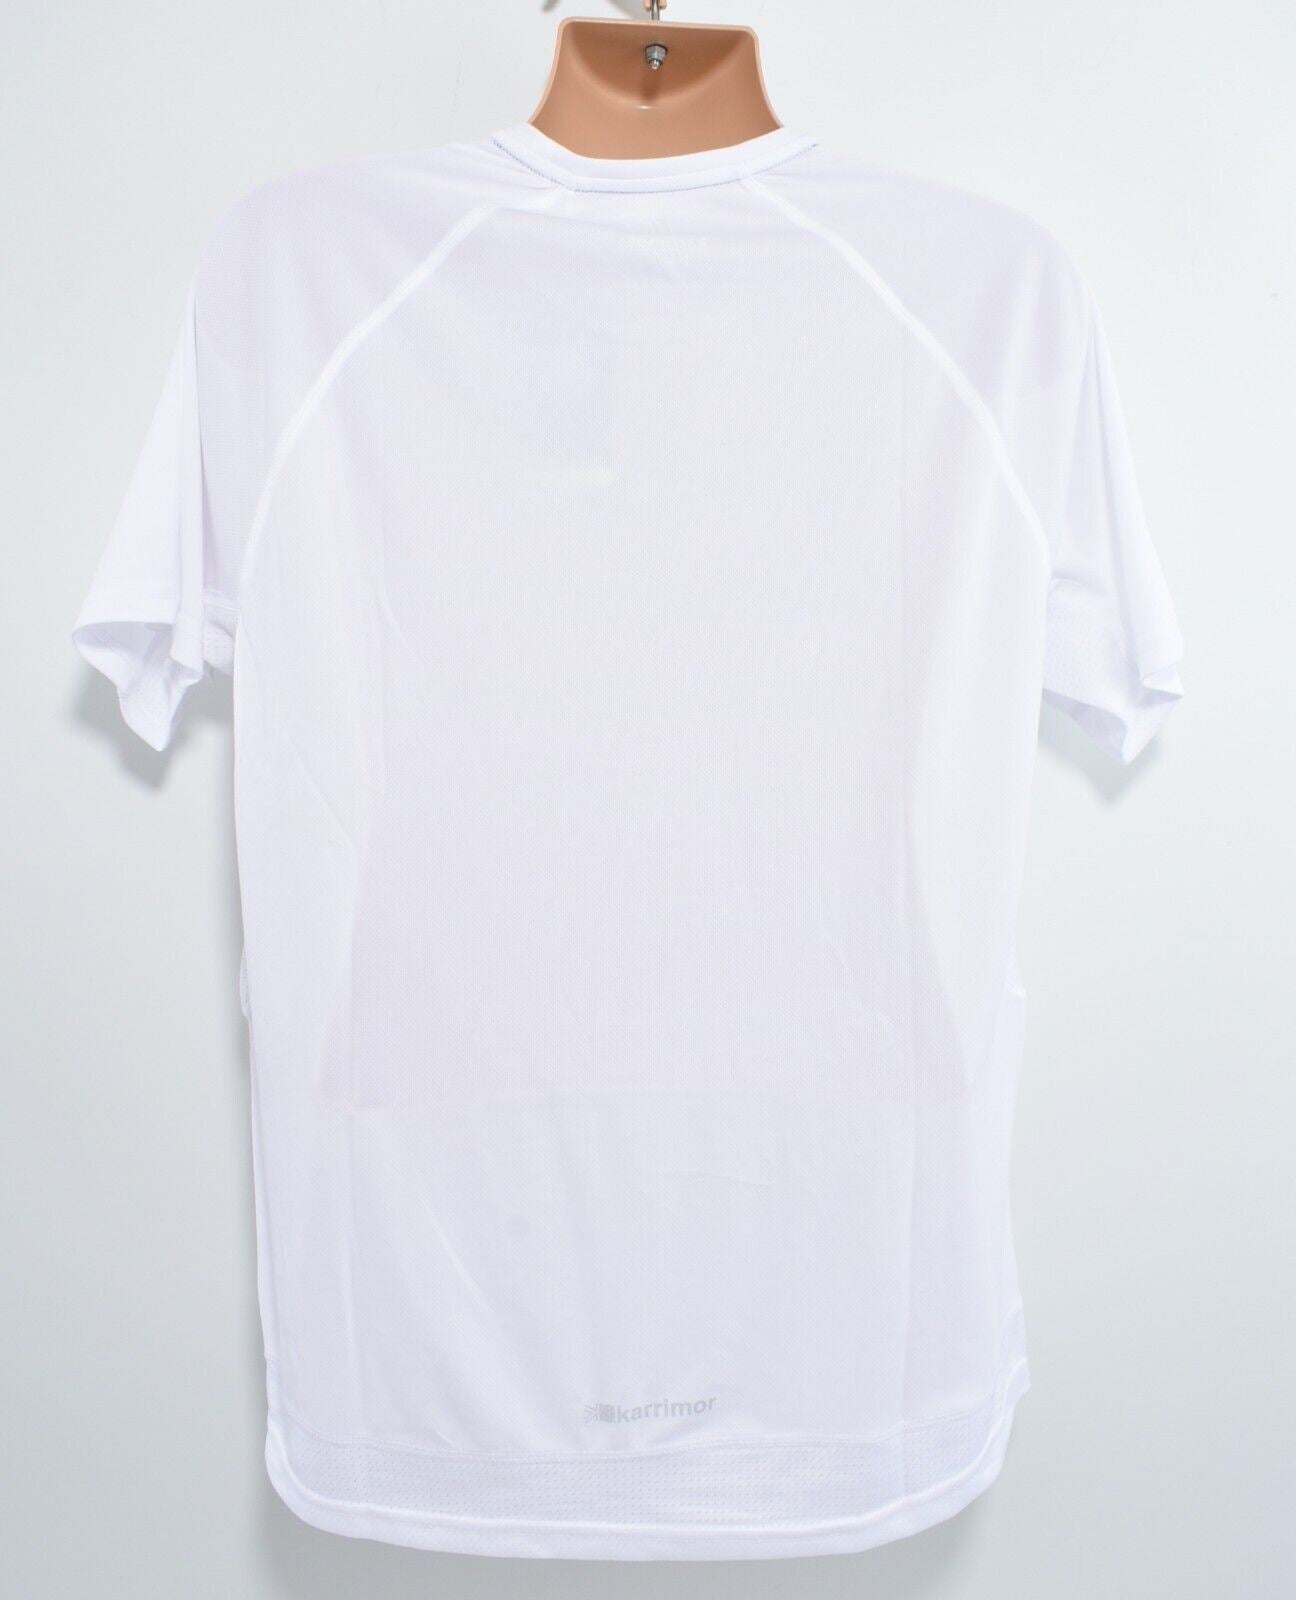 KARRIMOR Mens Short Sleeve Running Tee, Activewear T-shirt, White, size L